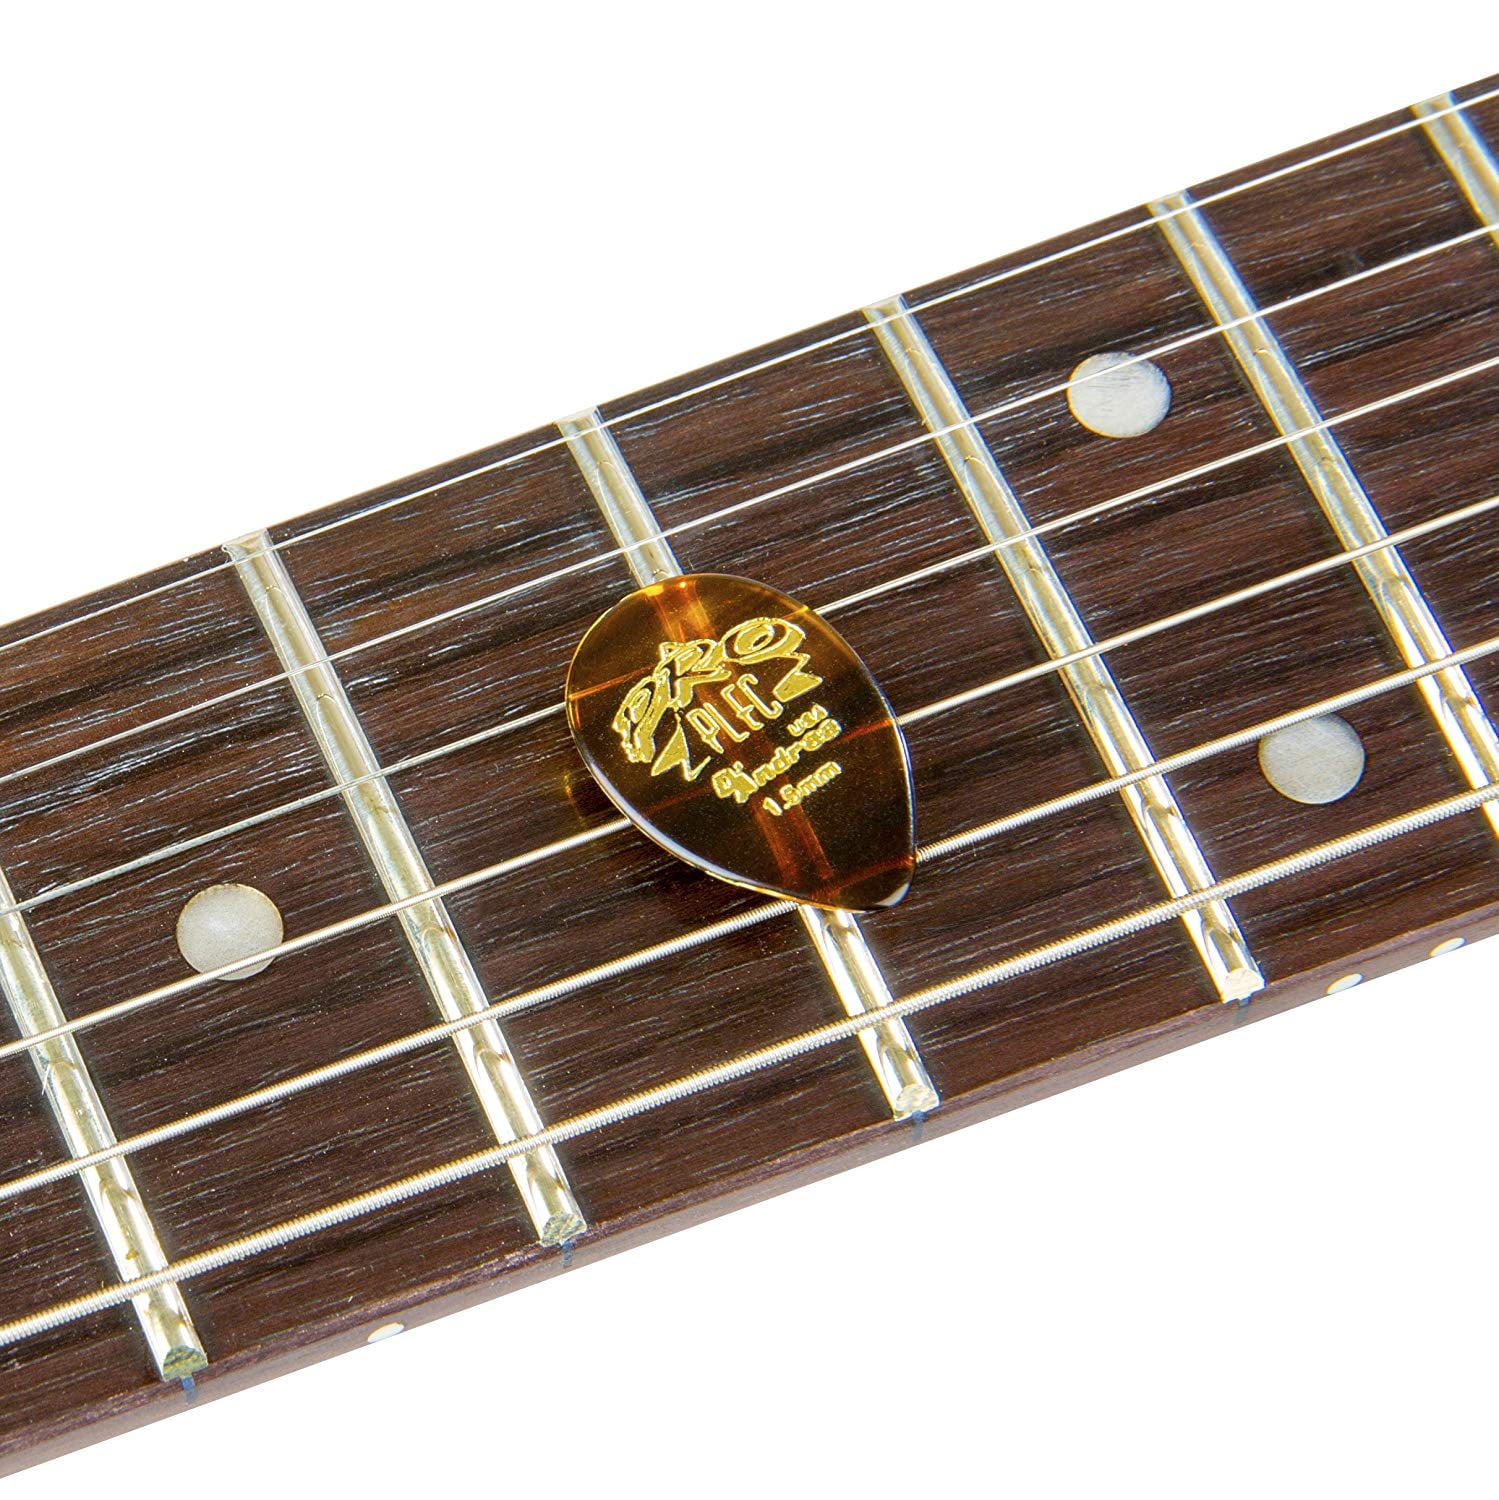 DAndrea PRO-358 Pro Plec 1.5mm Guitar Pick with Shell Finish 12 Piece, Pointed Teardrop 